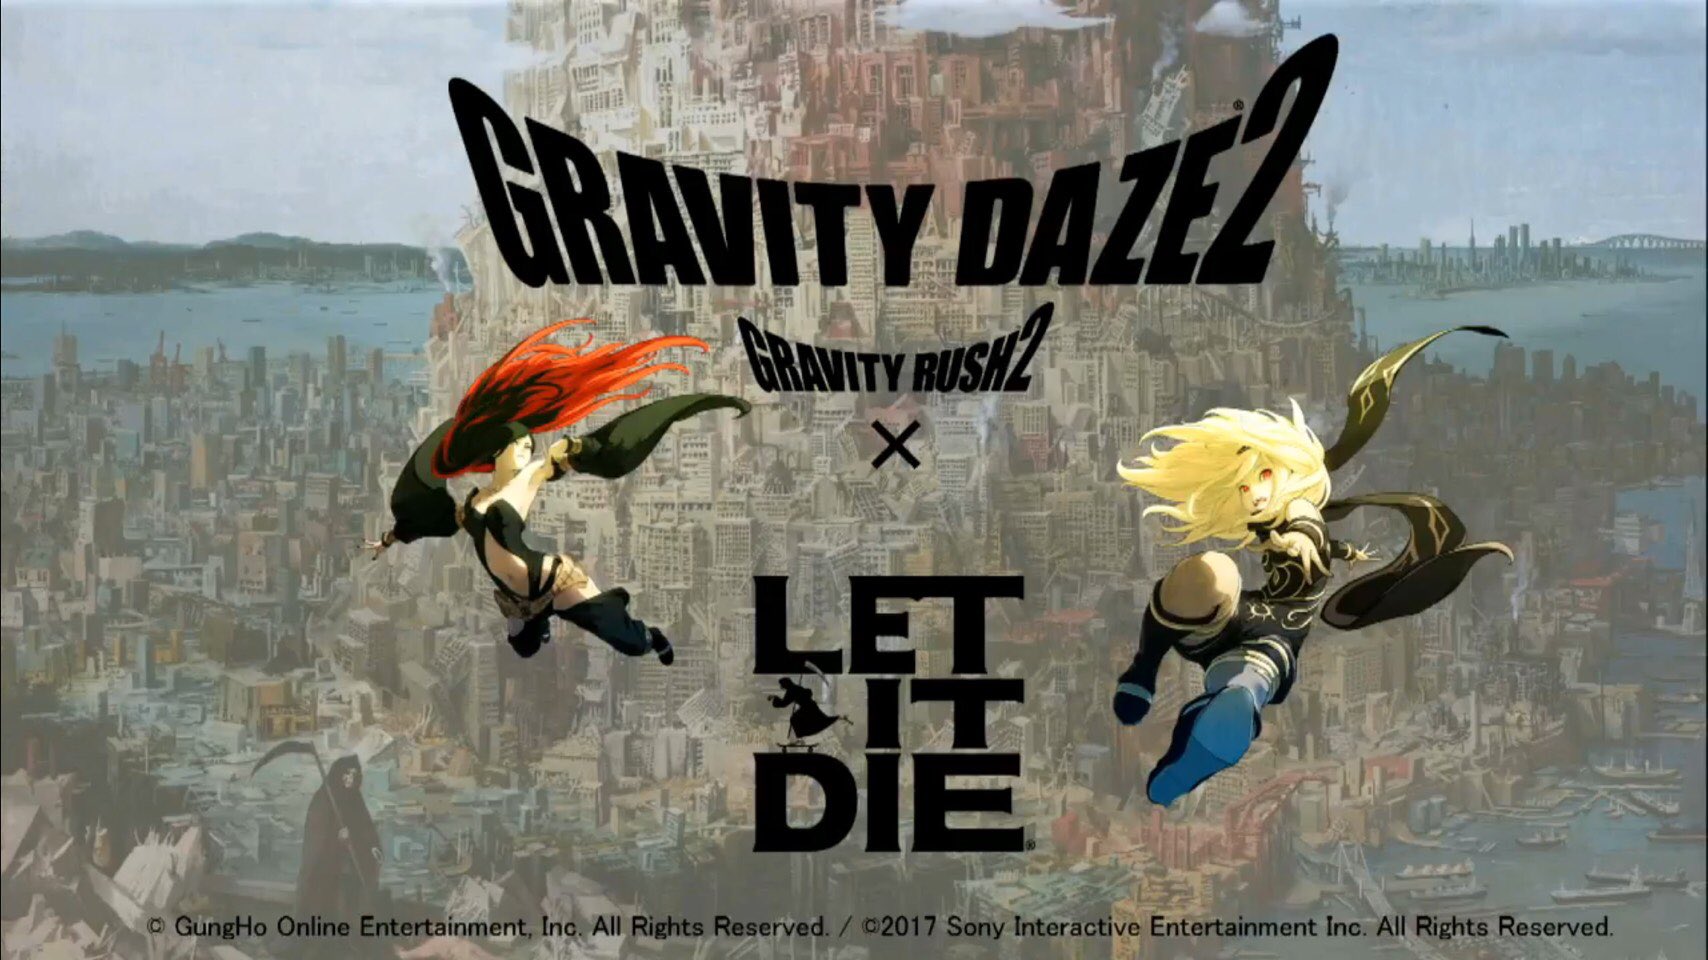 Gravity Daze 2 X Let It Die